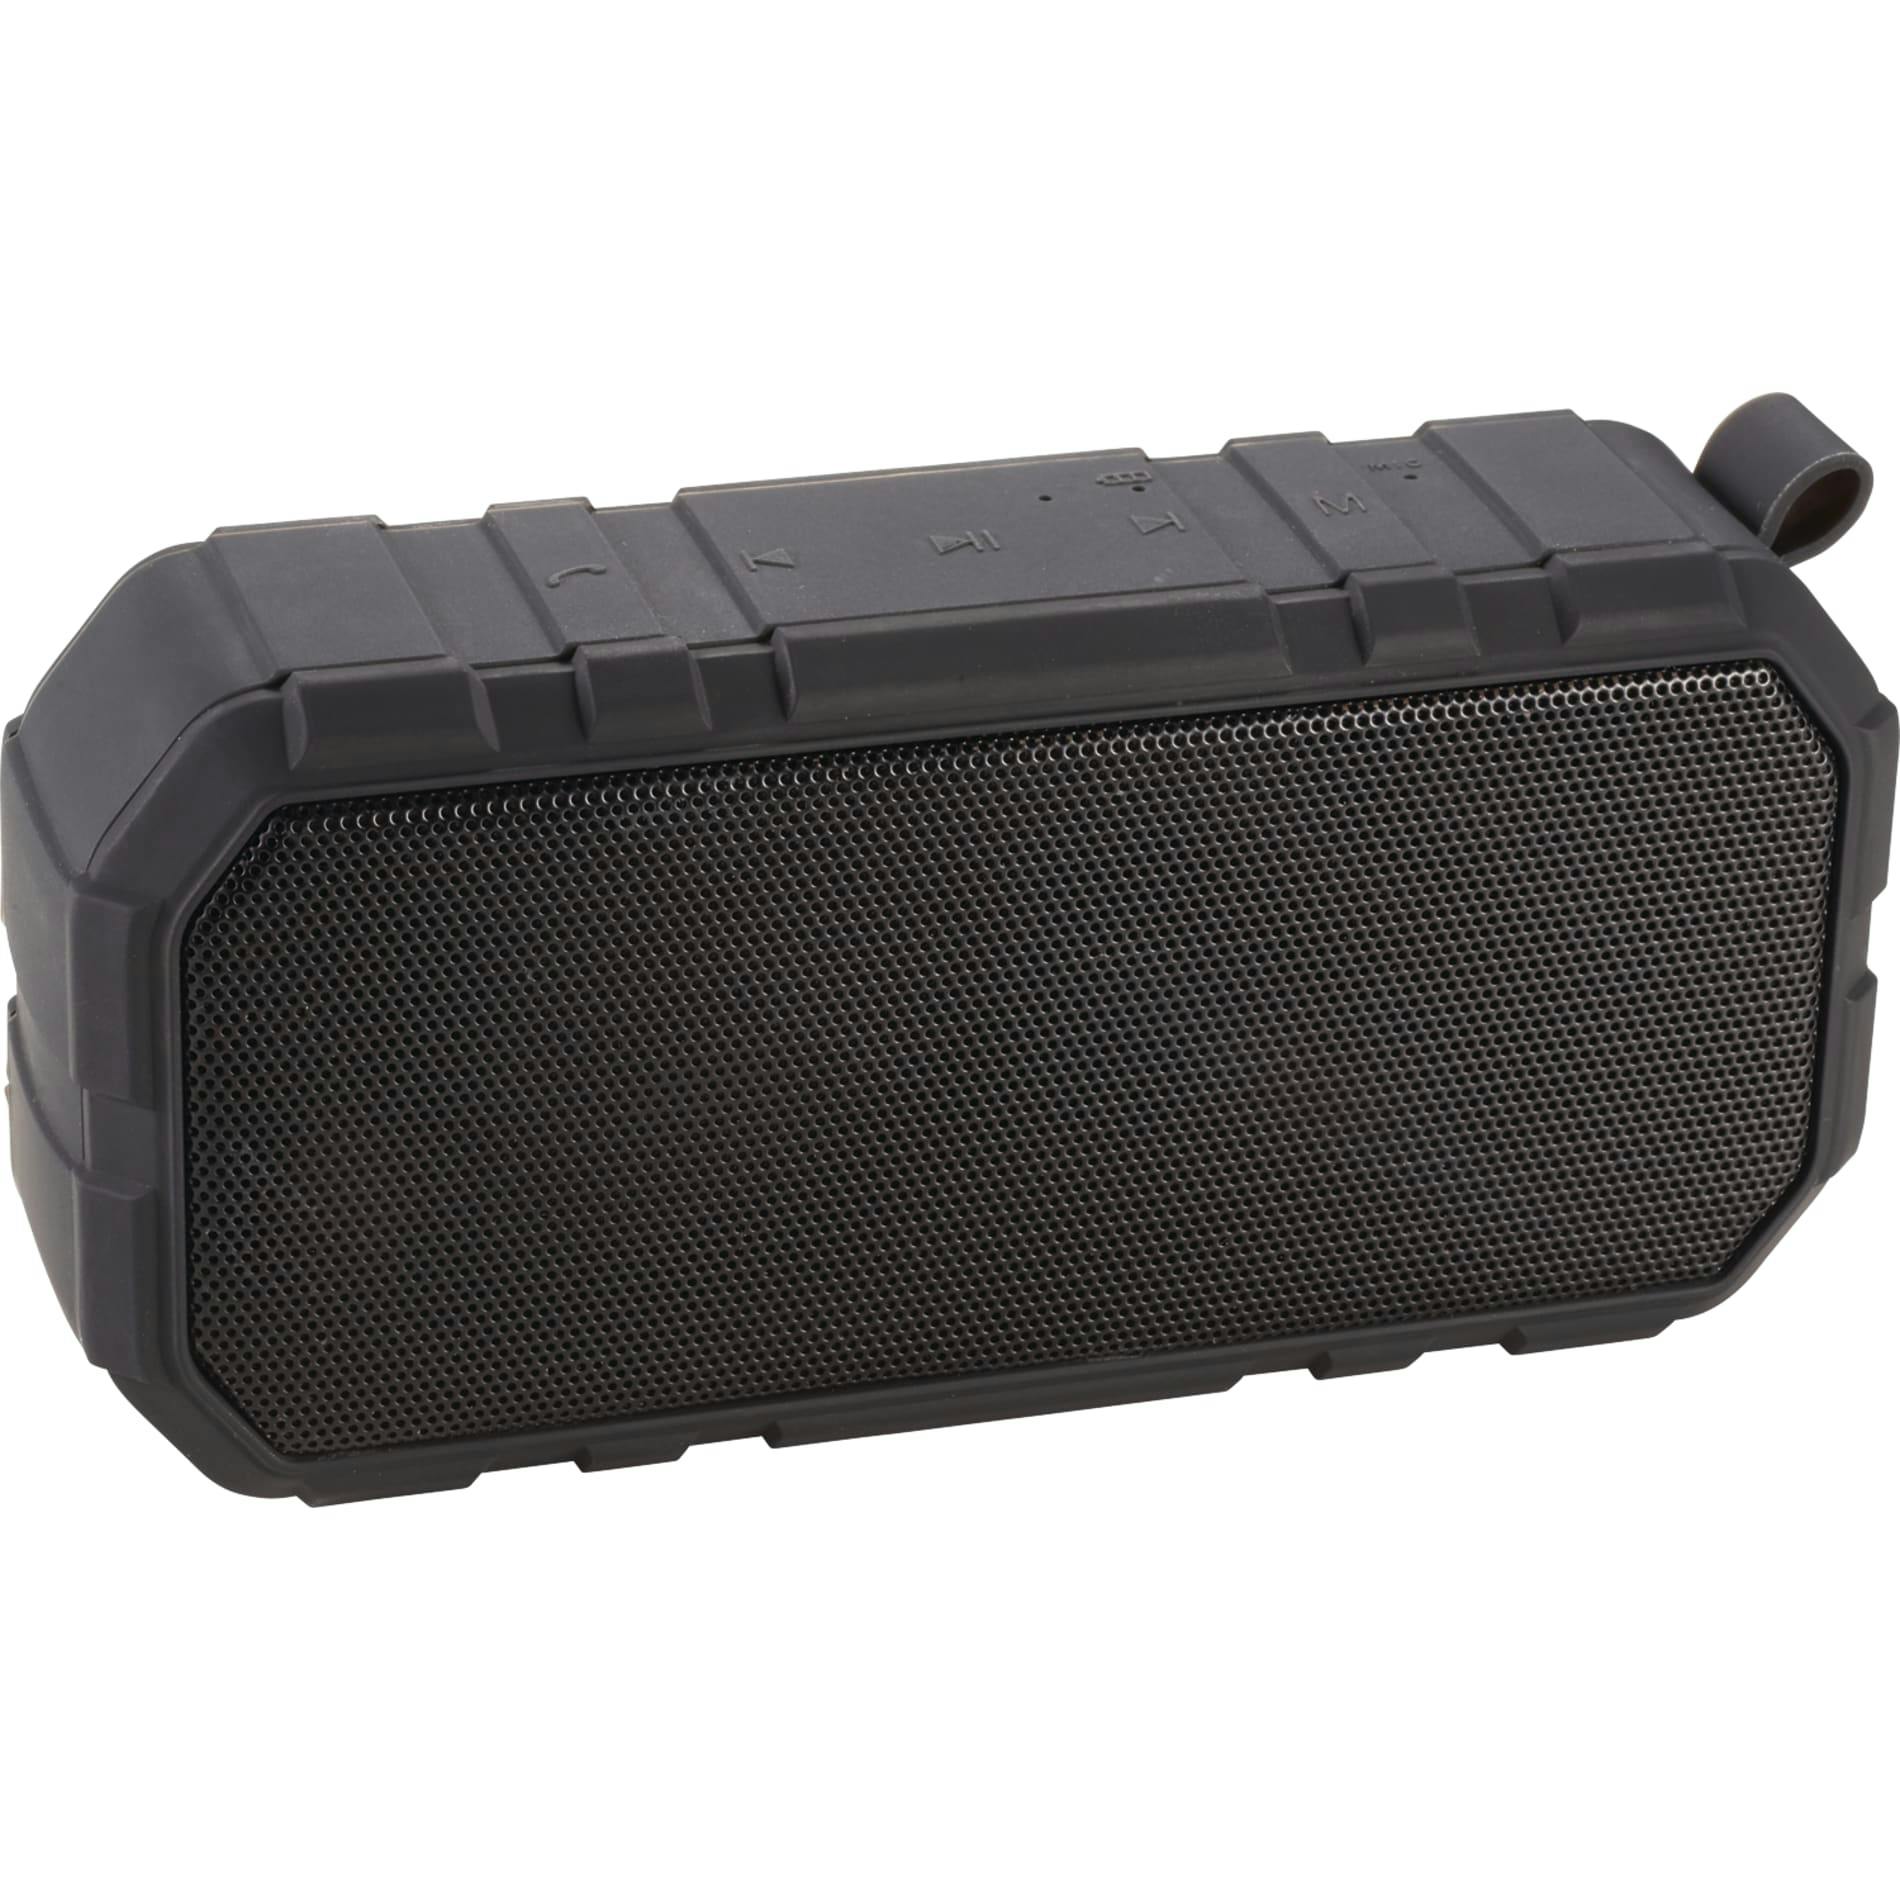 Brick Outdoor Waterproof Bluetooth Speaker - additional Image 10